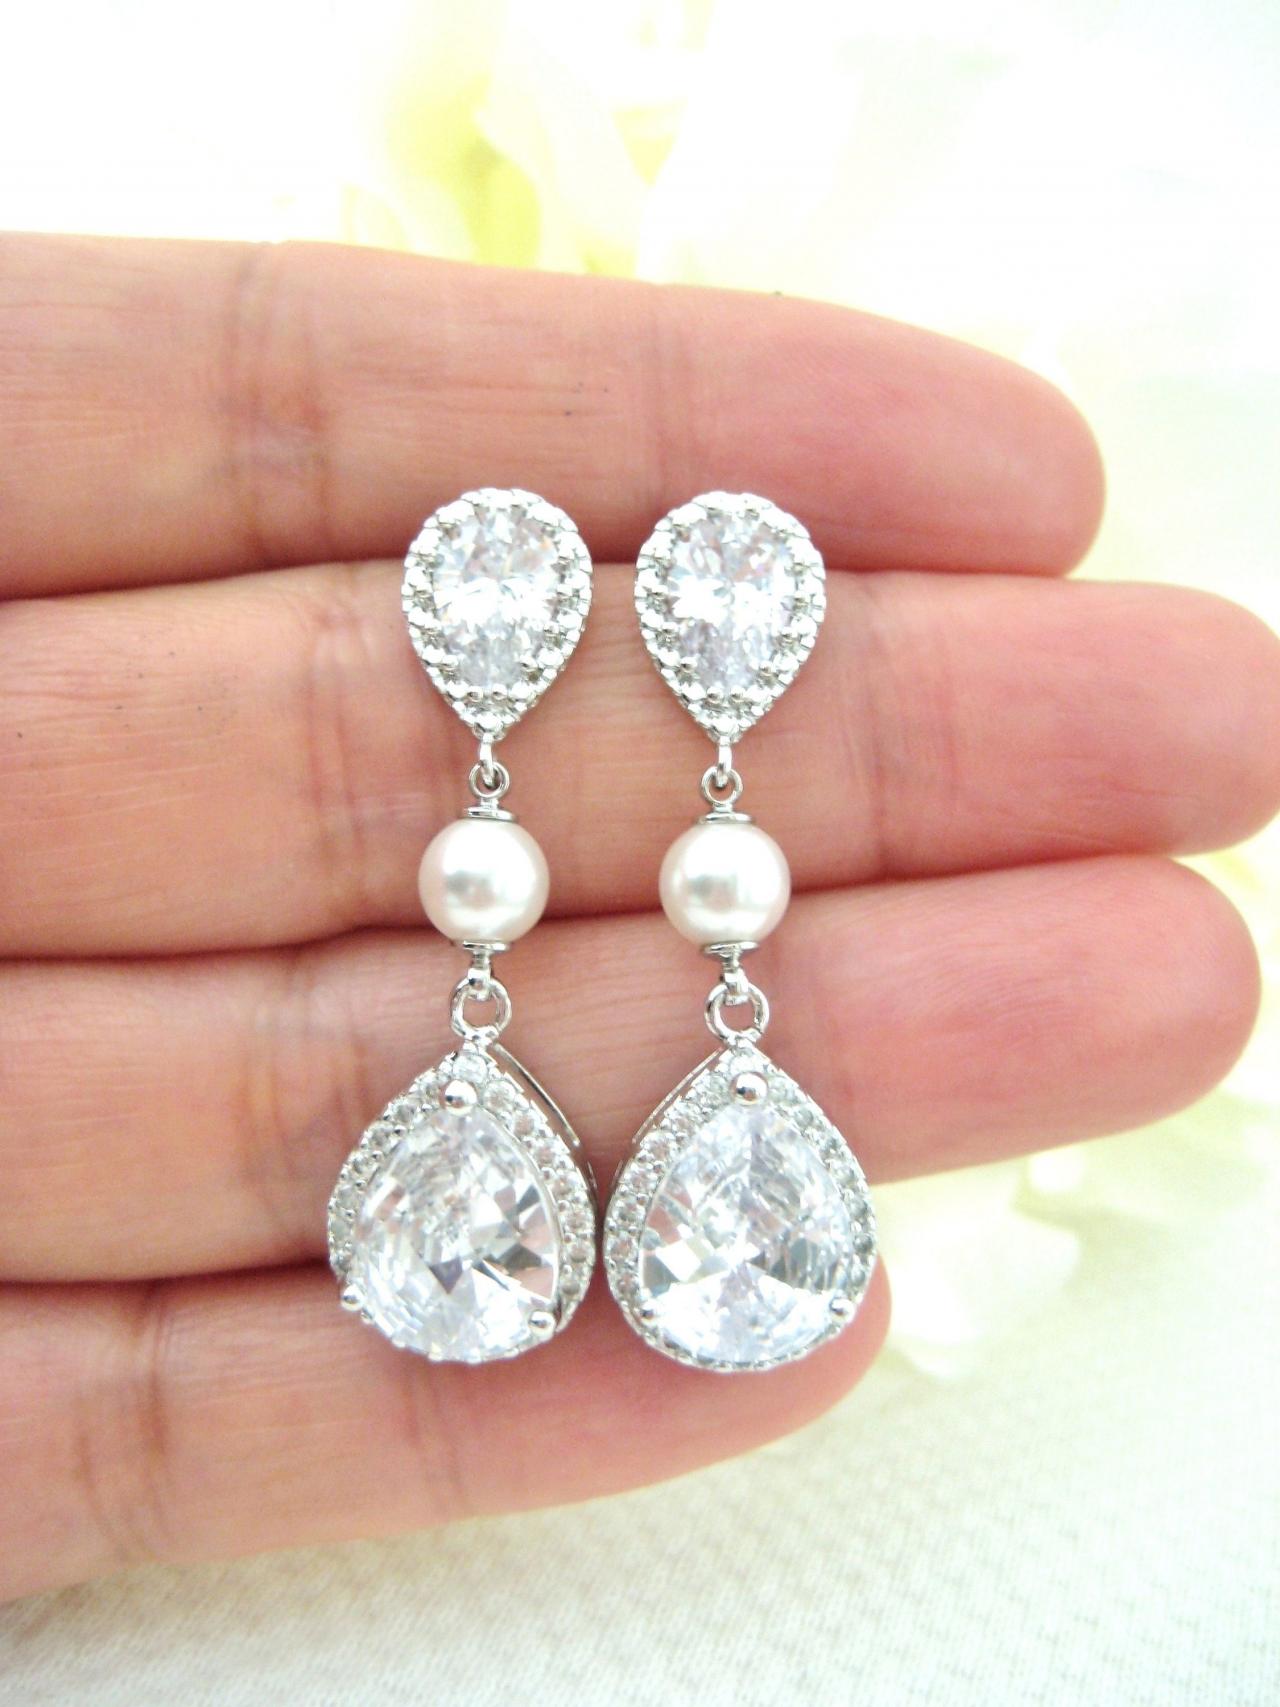 Bridal Crystal Earrings Cubic Zirconia Teardrop Wedding Jewelry Bridesmaids Gift Drop Dangle Earrings Sparky Earrings Birthday Gift (e021)